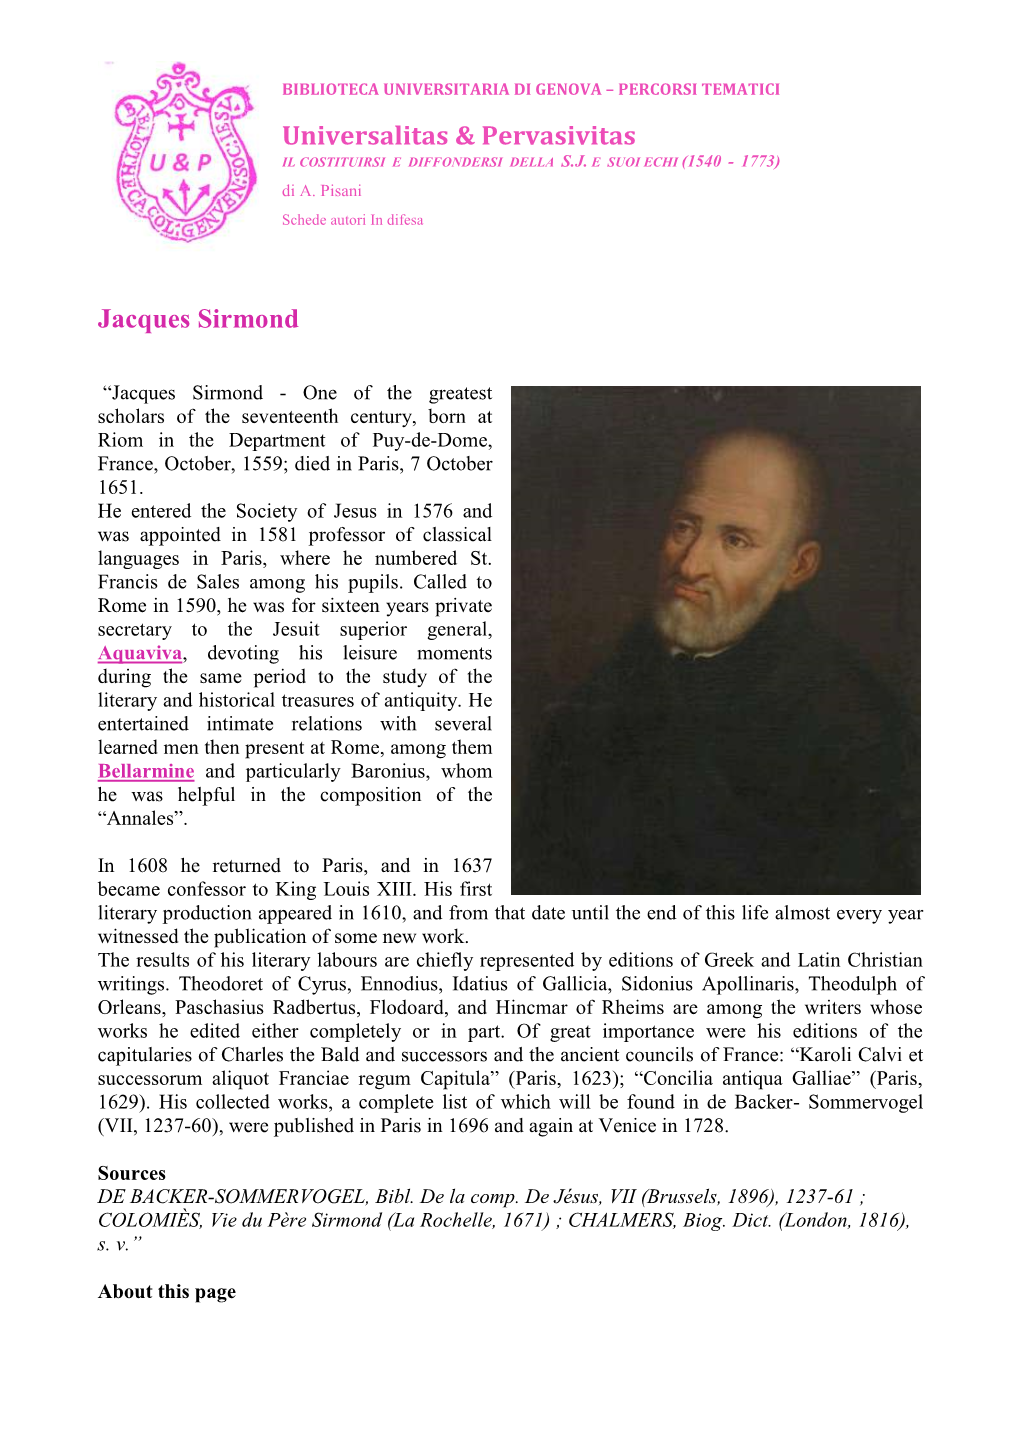 Sirmond, Jacques &lt;1559-1651&gt;